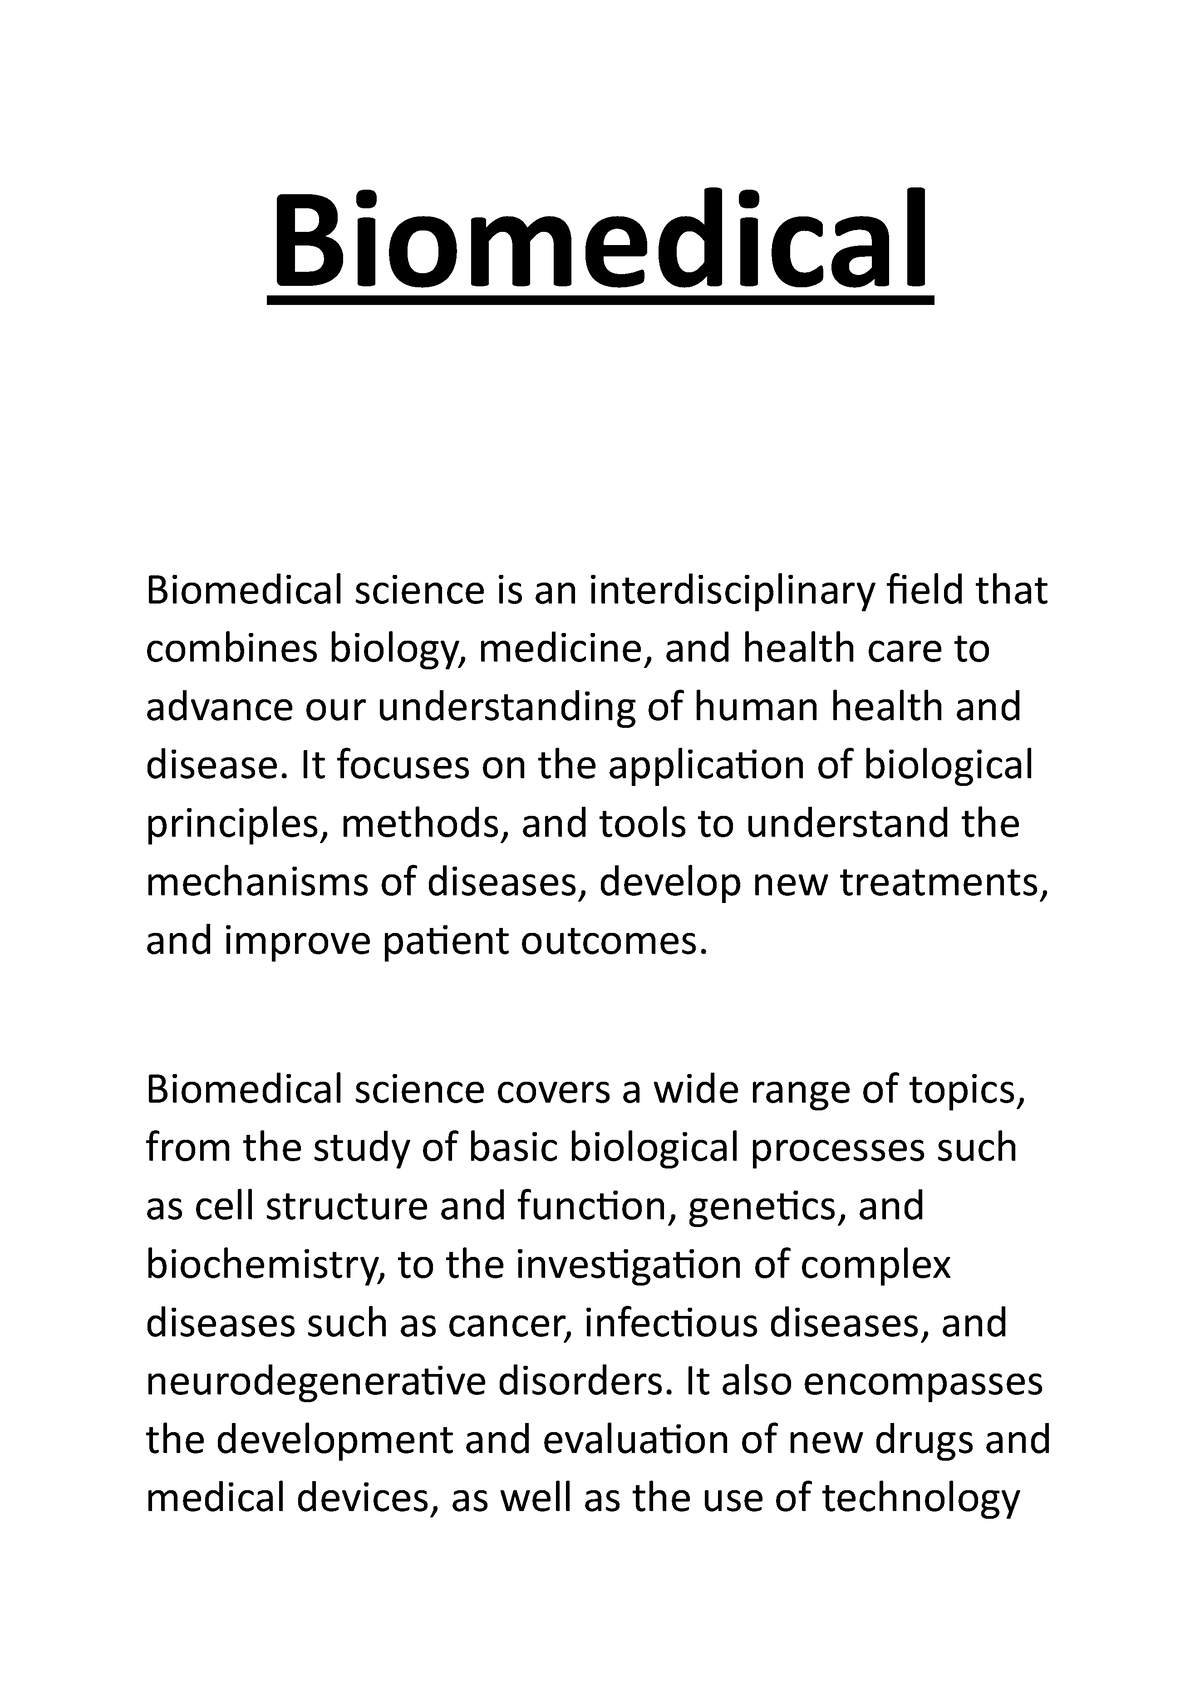 thesis biomedical science